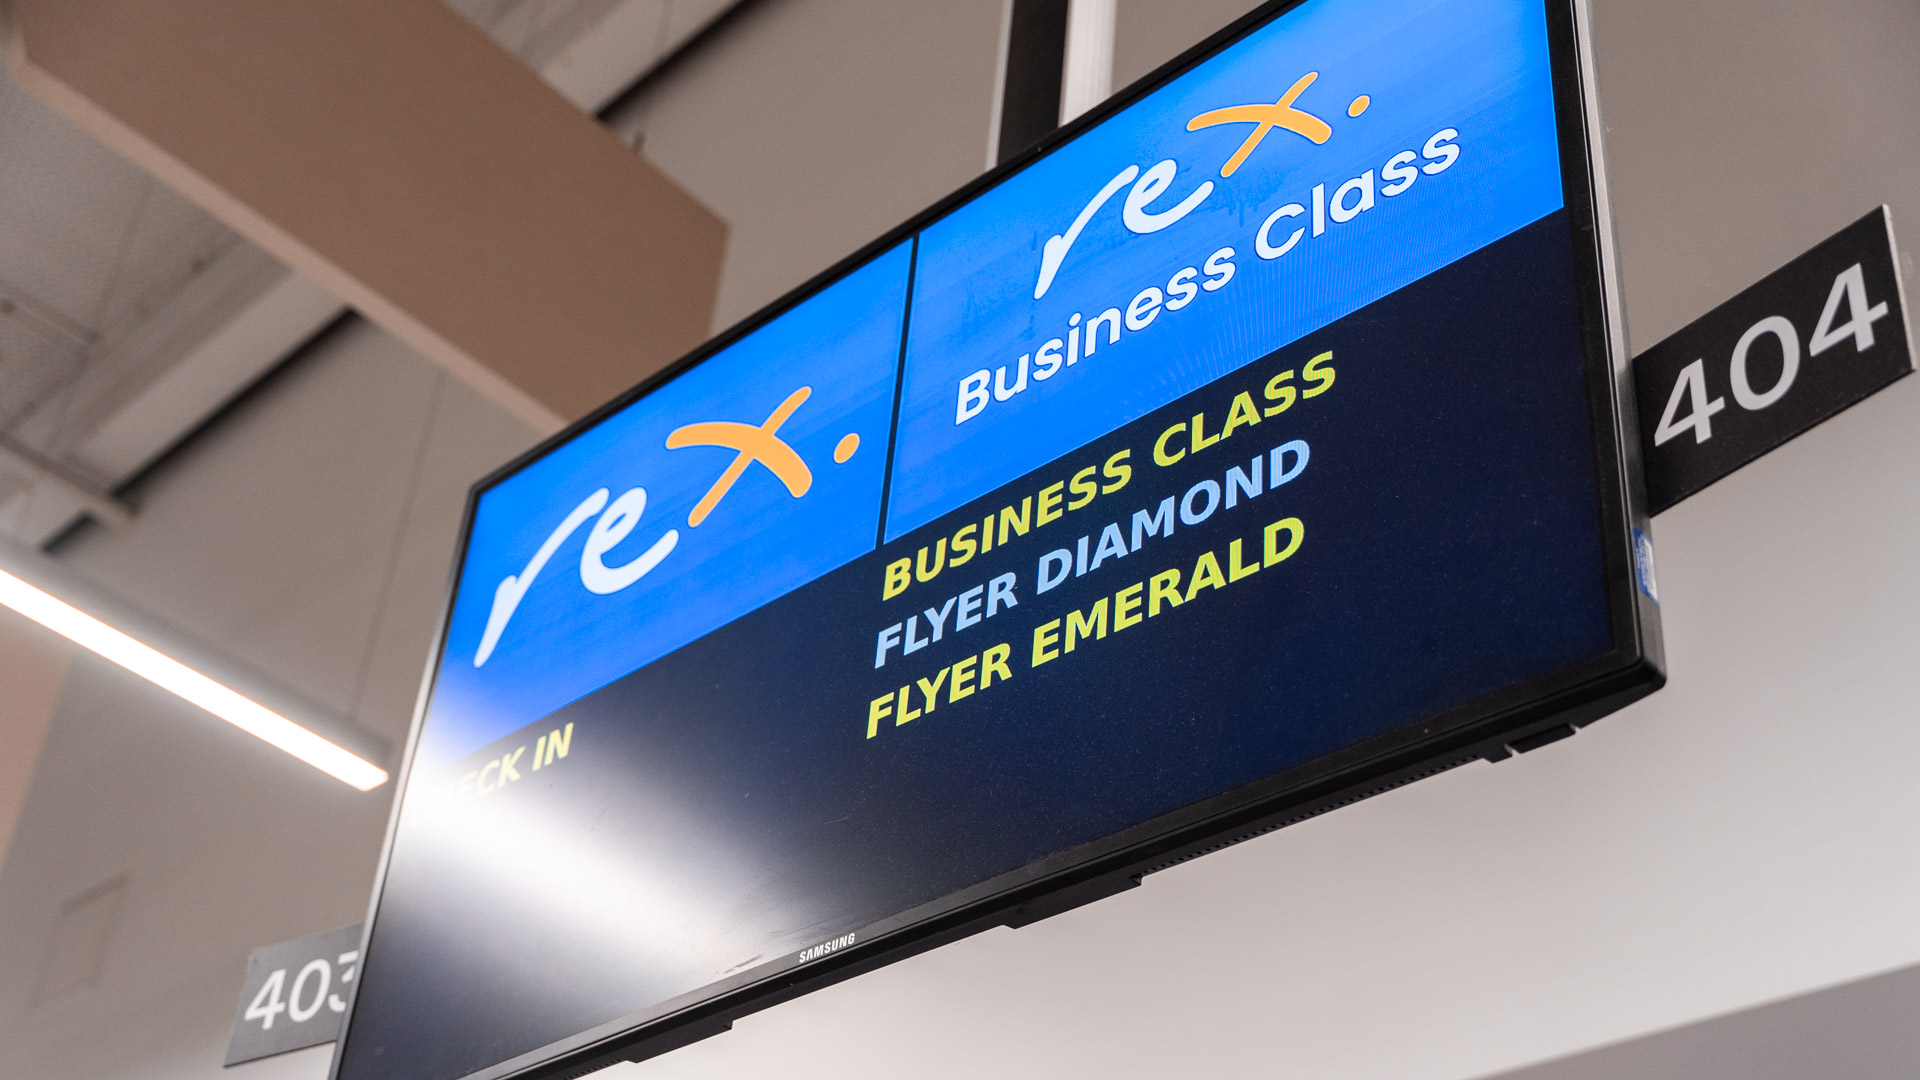 Rex Melbourne-Perth Business Class